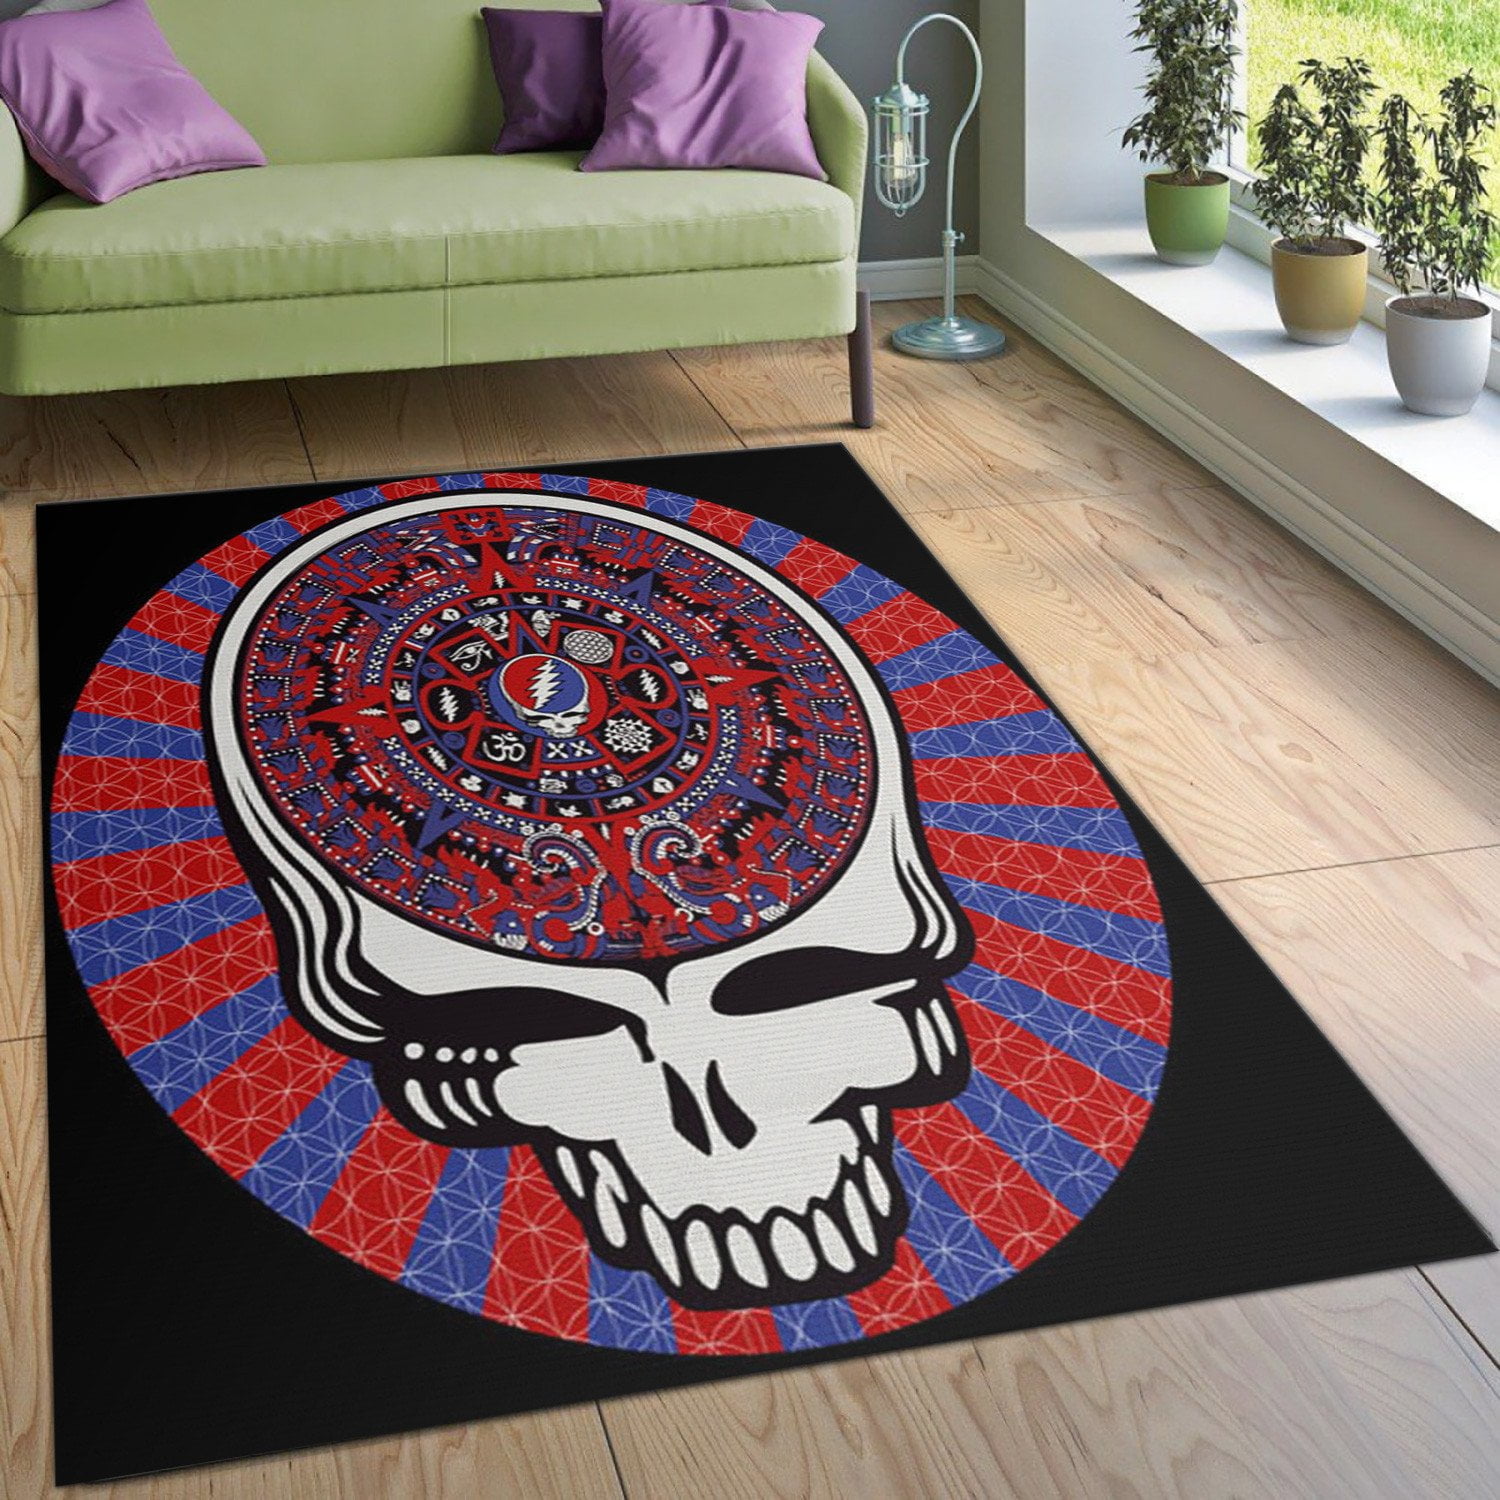 GRATEFUL DEAD Round carpet Football rug Floor Decor The US Decor